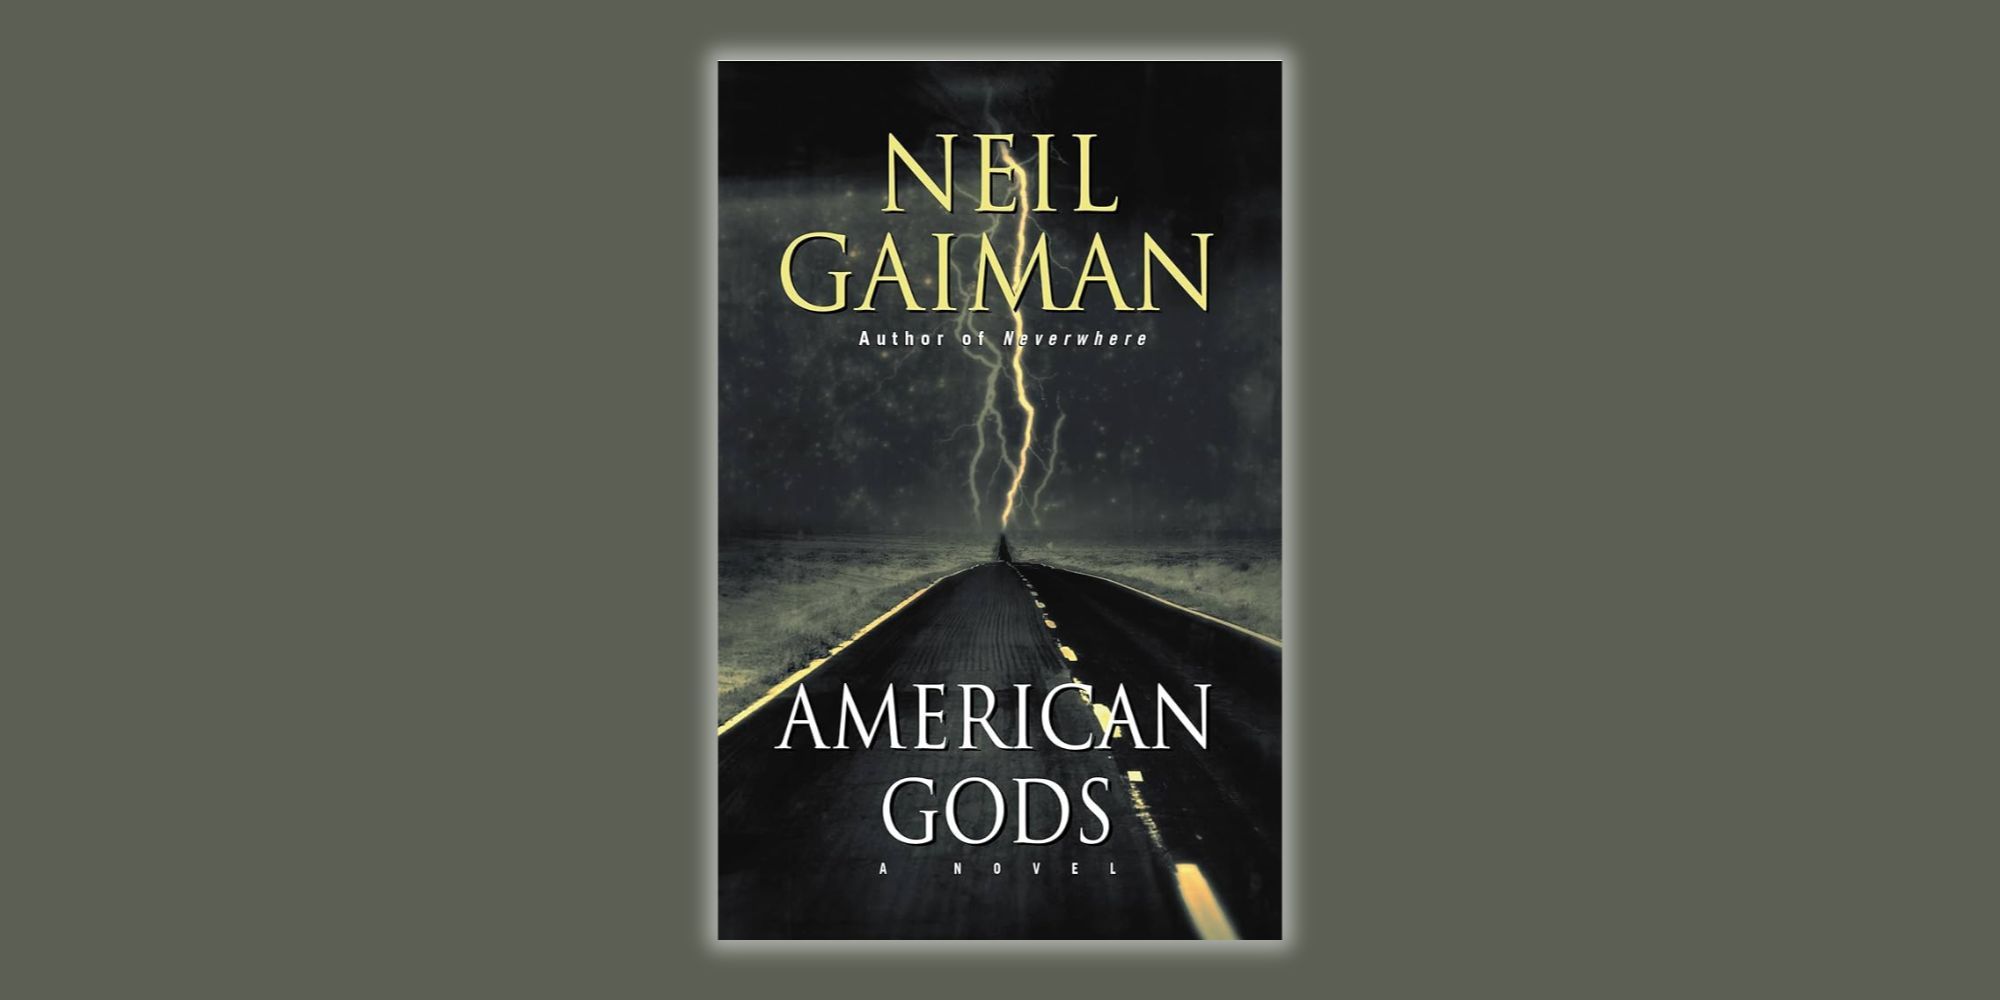 American Gods book cover